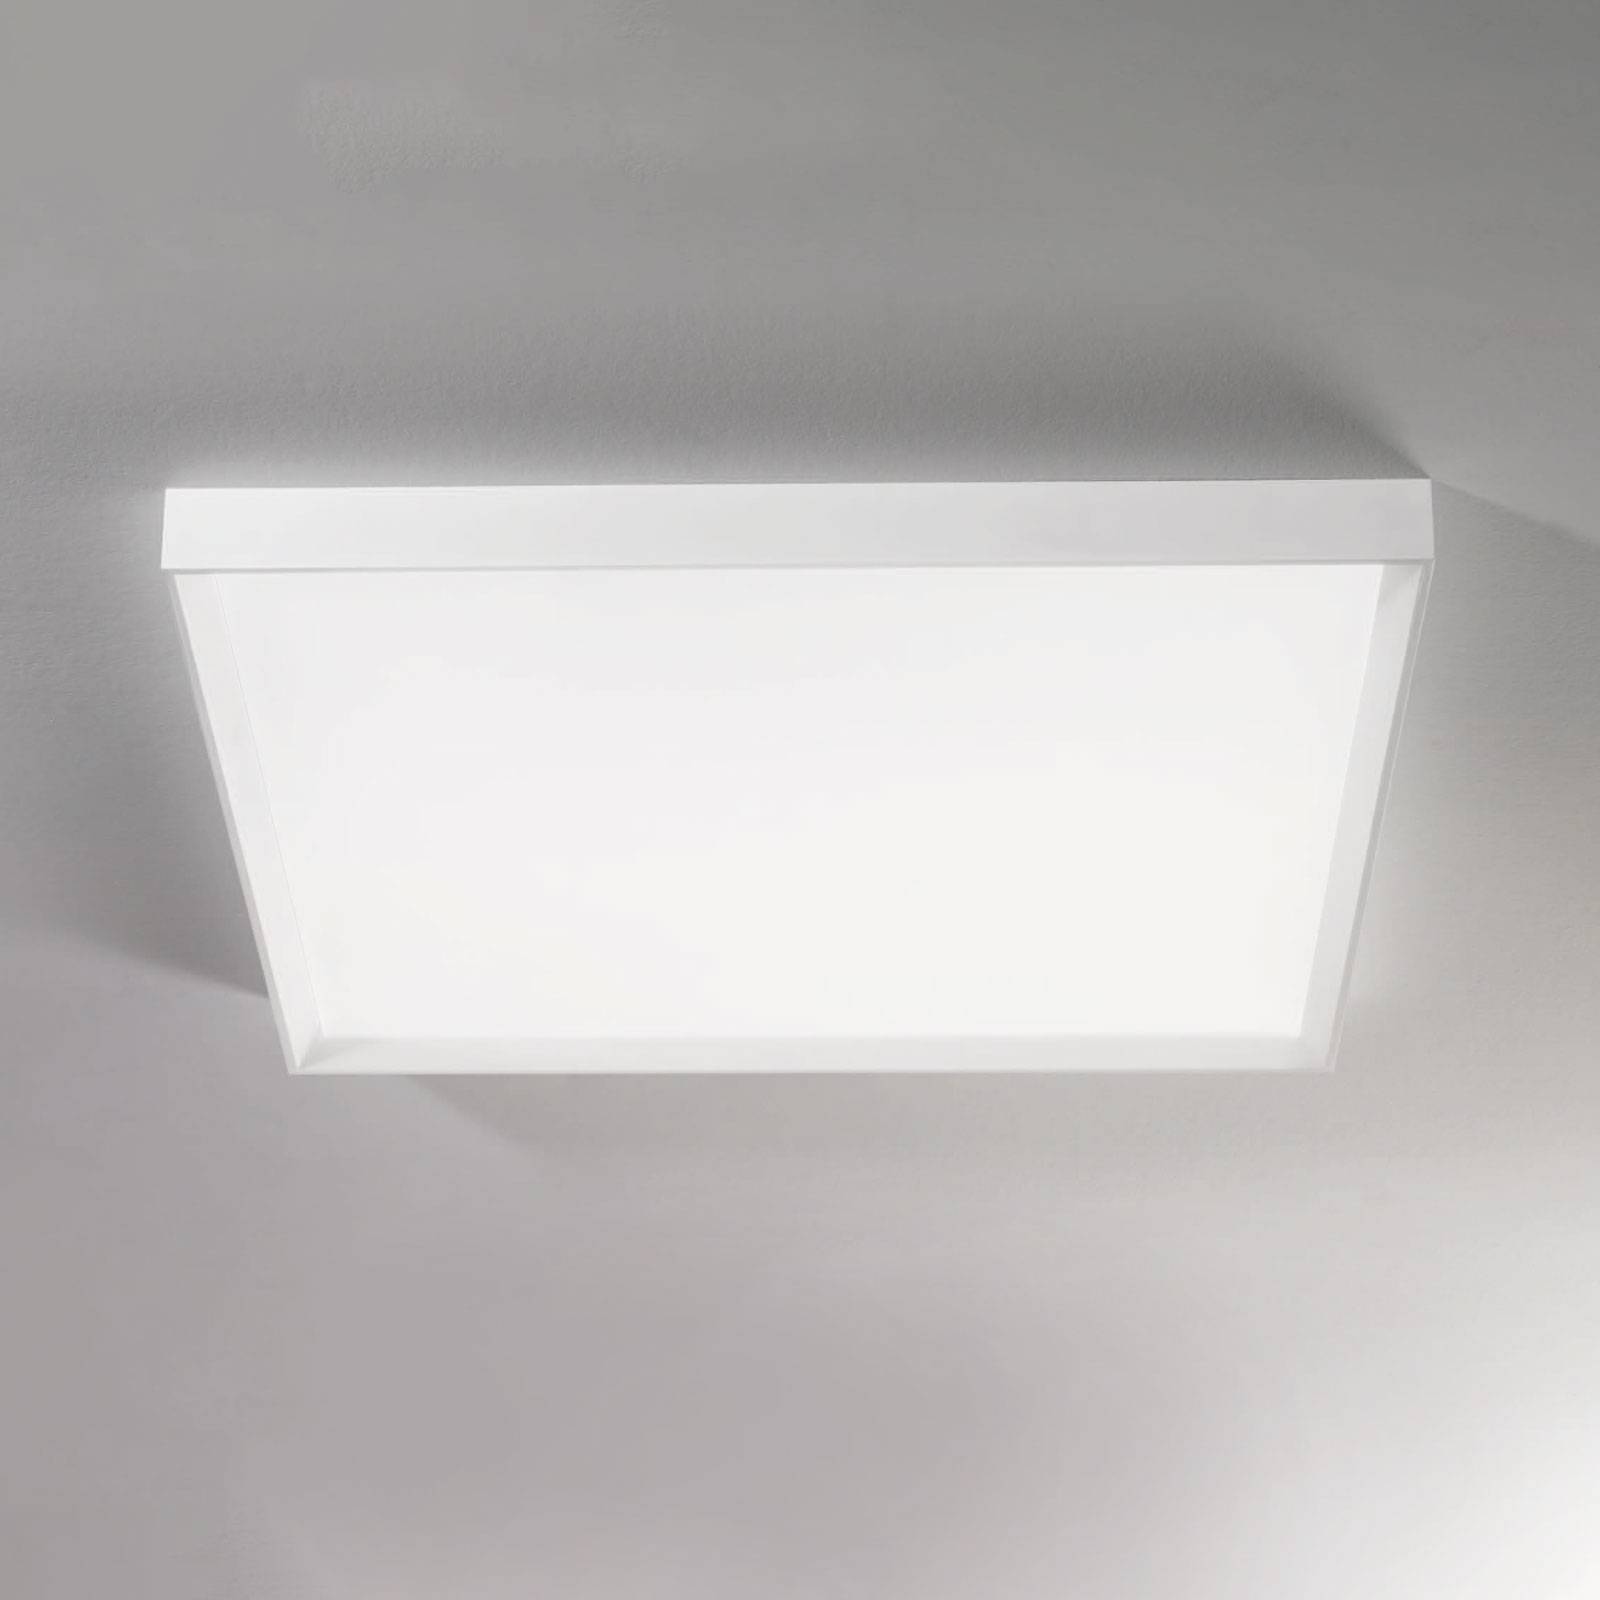 Image of Linea Light Plafonnier LED Tara maxi, 74 cm x 74 cm 8033913032389